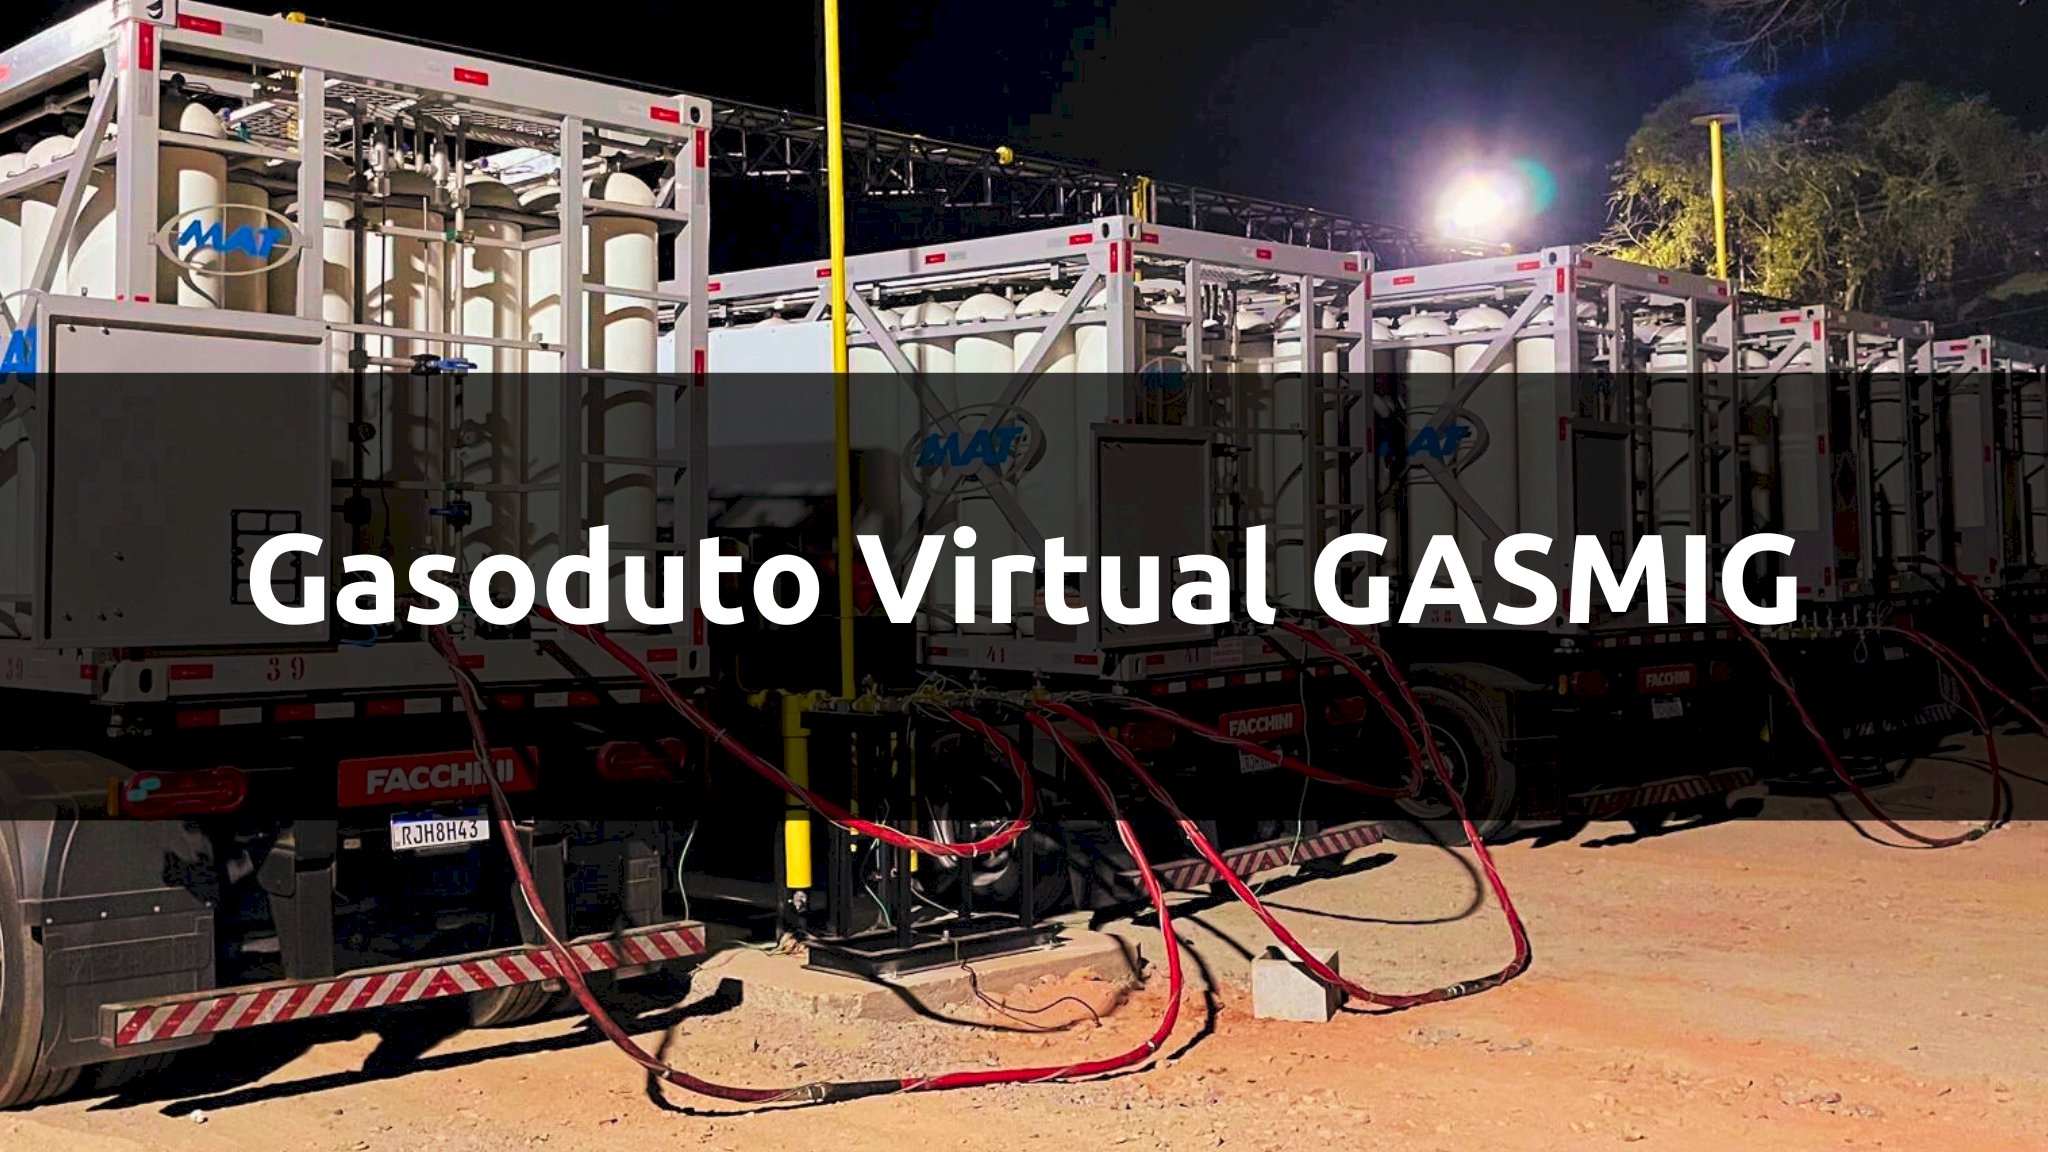 Gasoduto Virtual da GASMIG